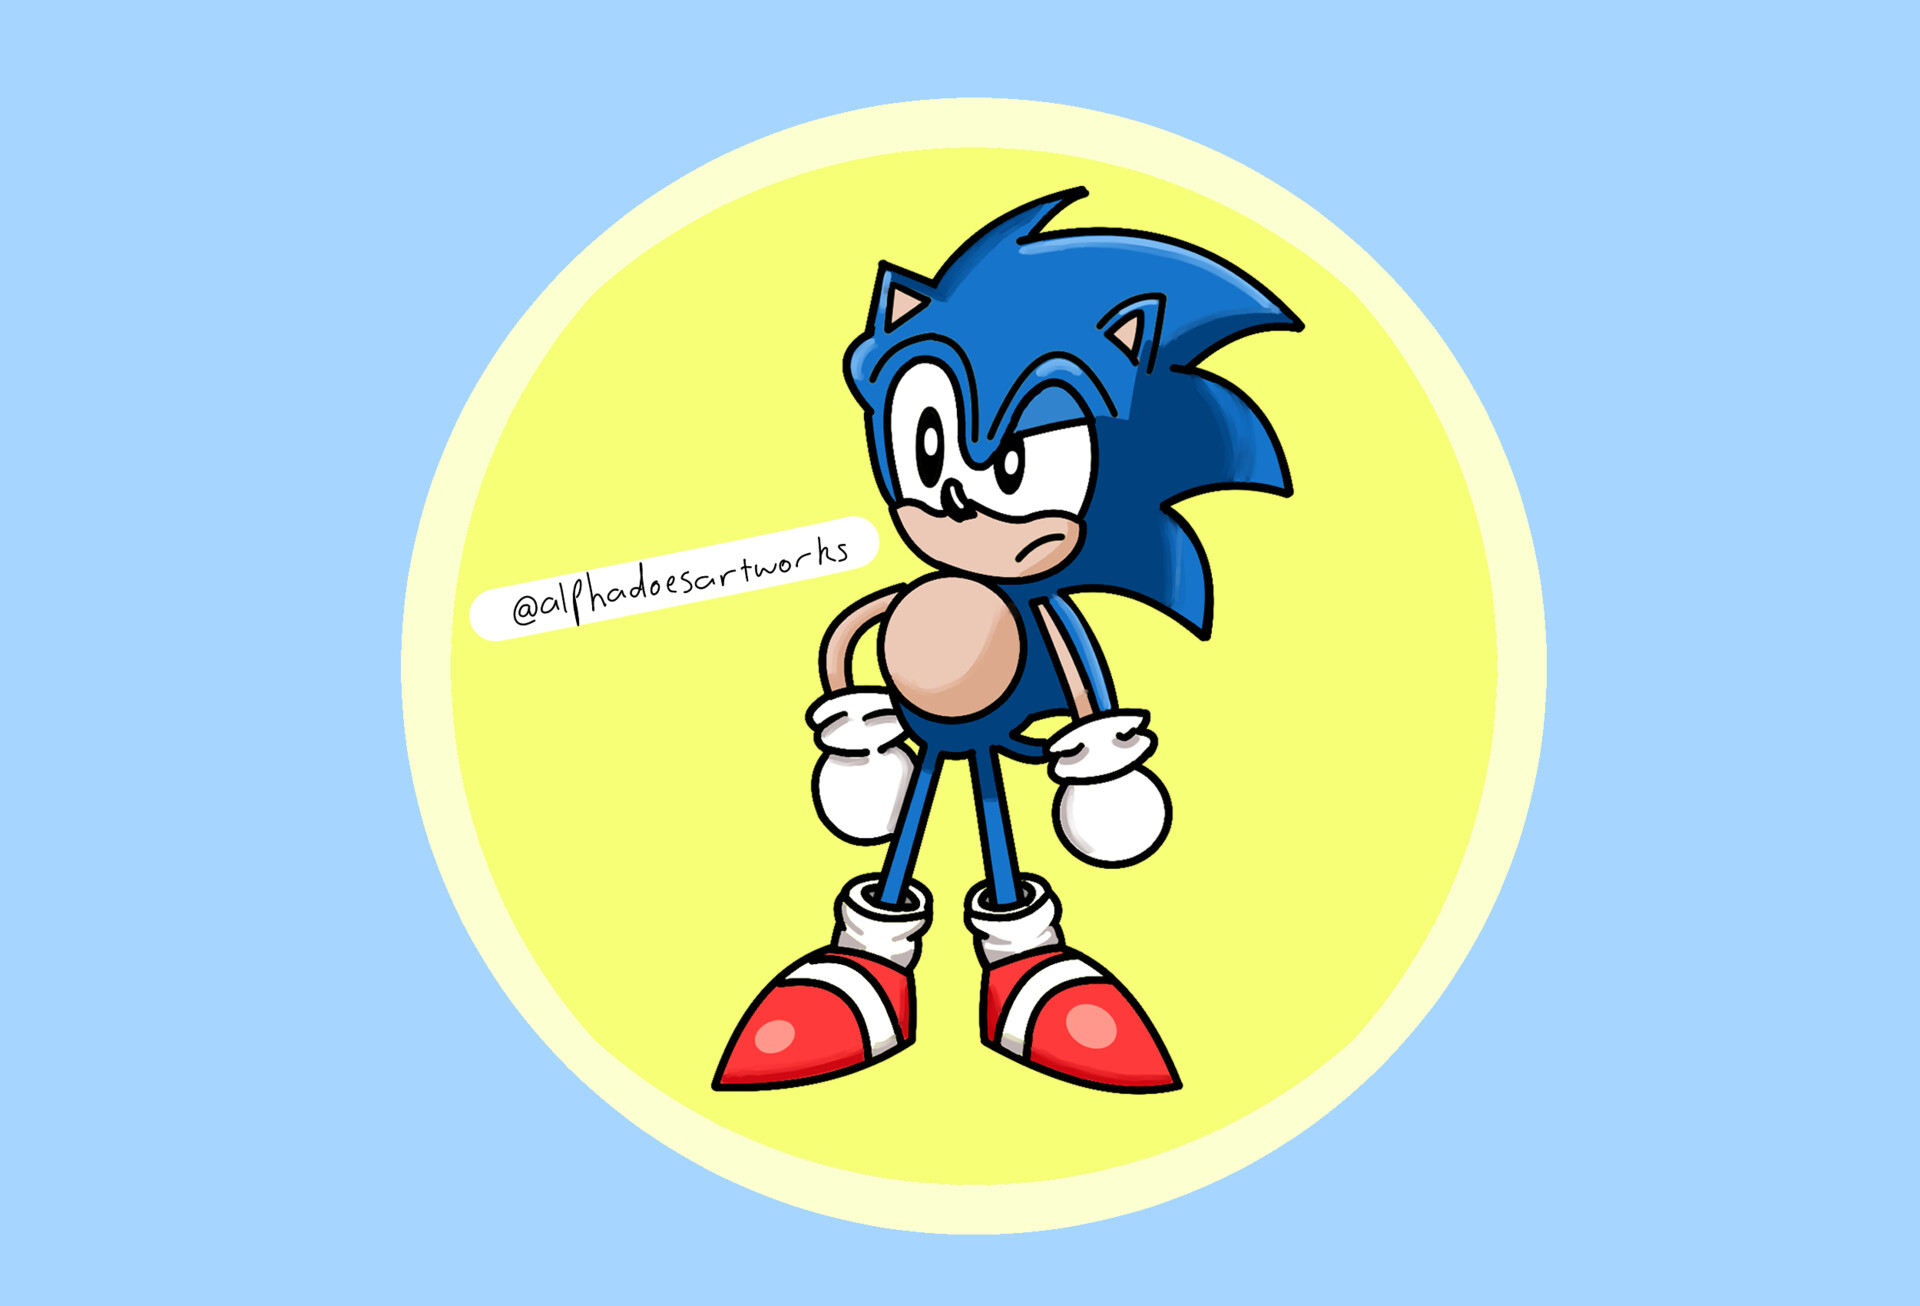 ArtStation - 2020 Art: #11 - Classic Sonic